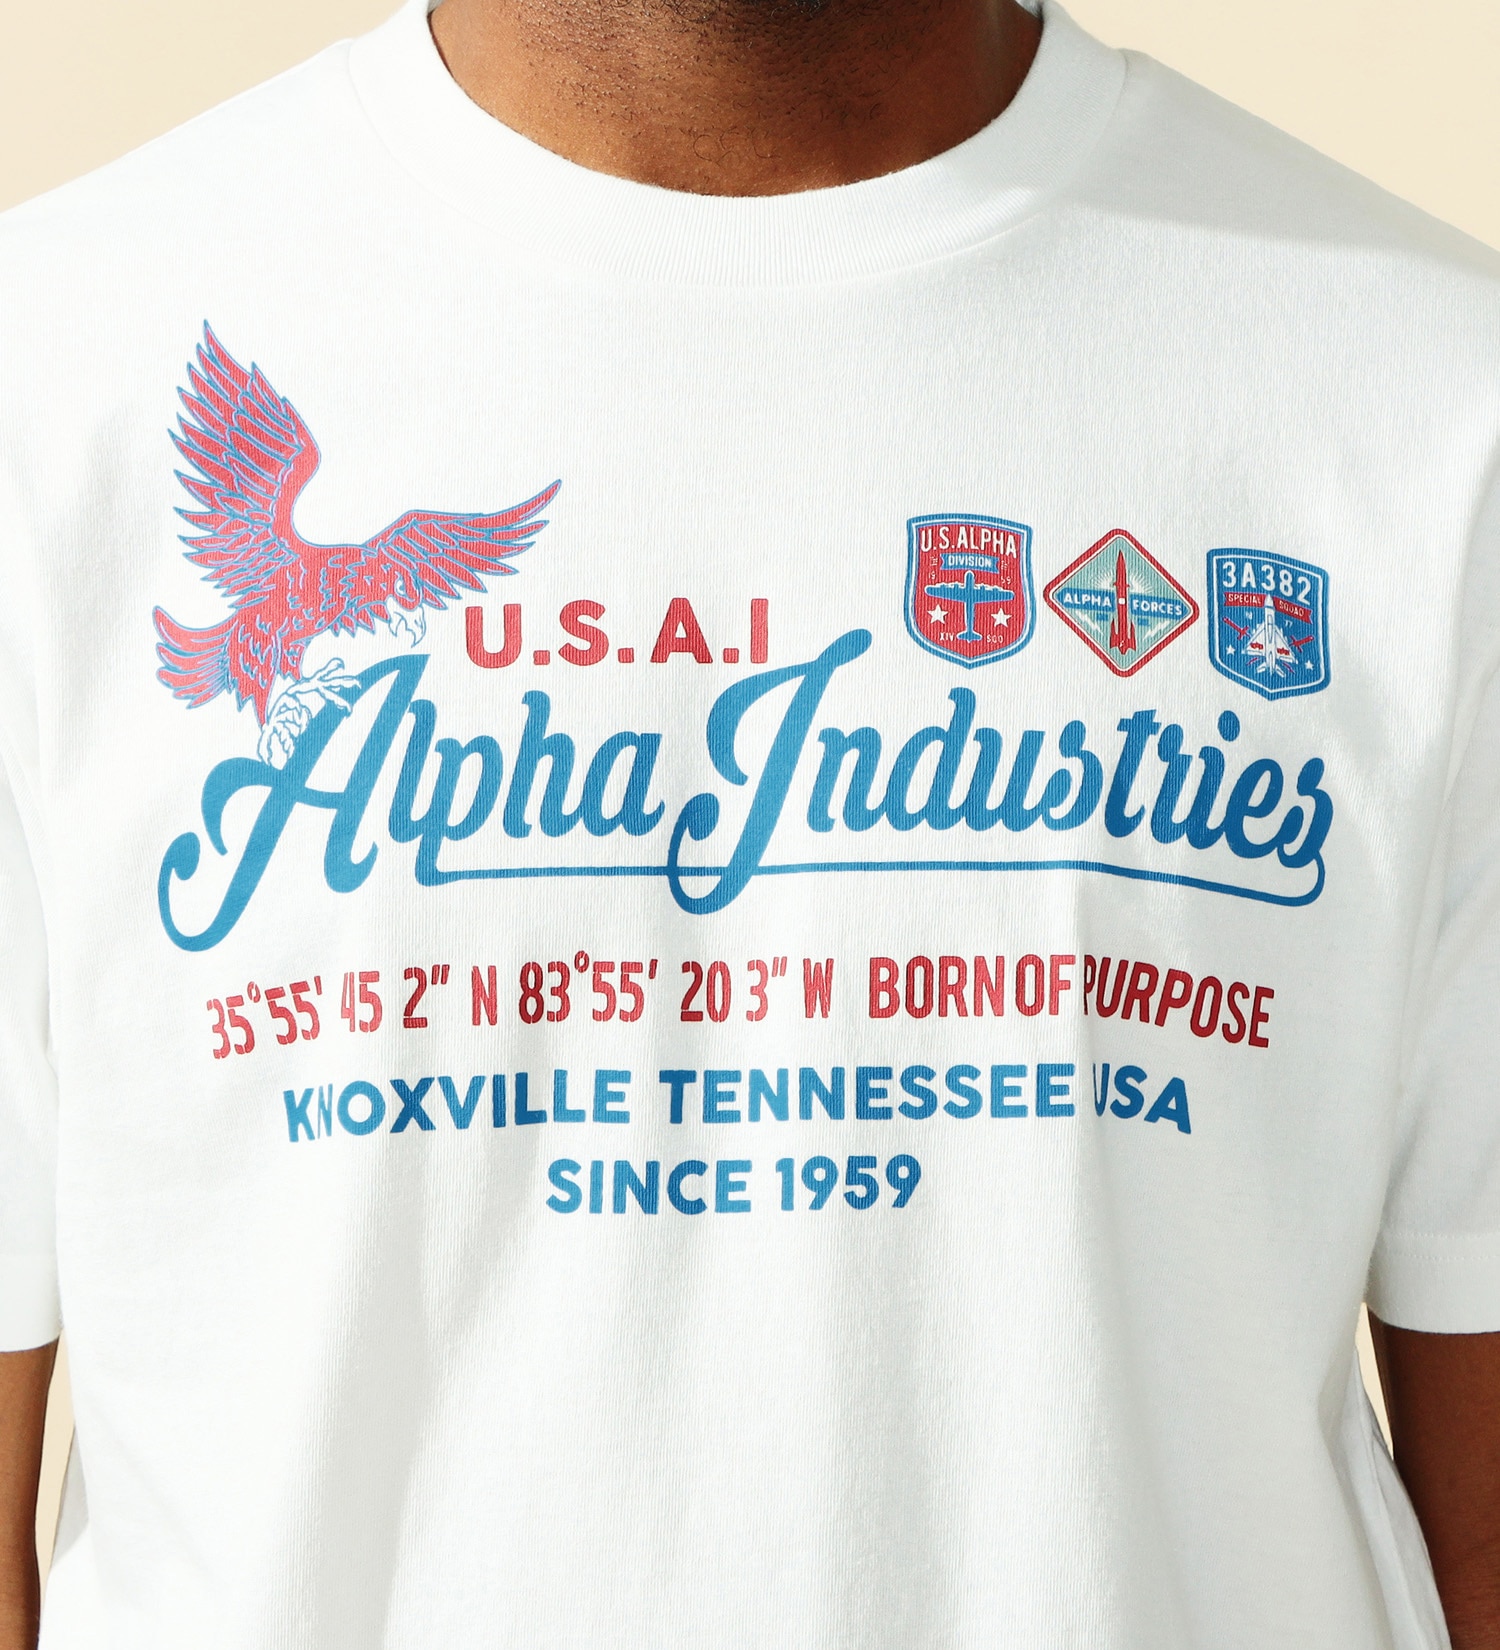 ALPHA(アルファ)のMILプリントＴシャツ 半袖|トップス/Tシャツ/カットソー/メンズ|ホワイト